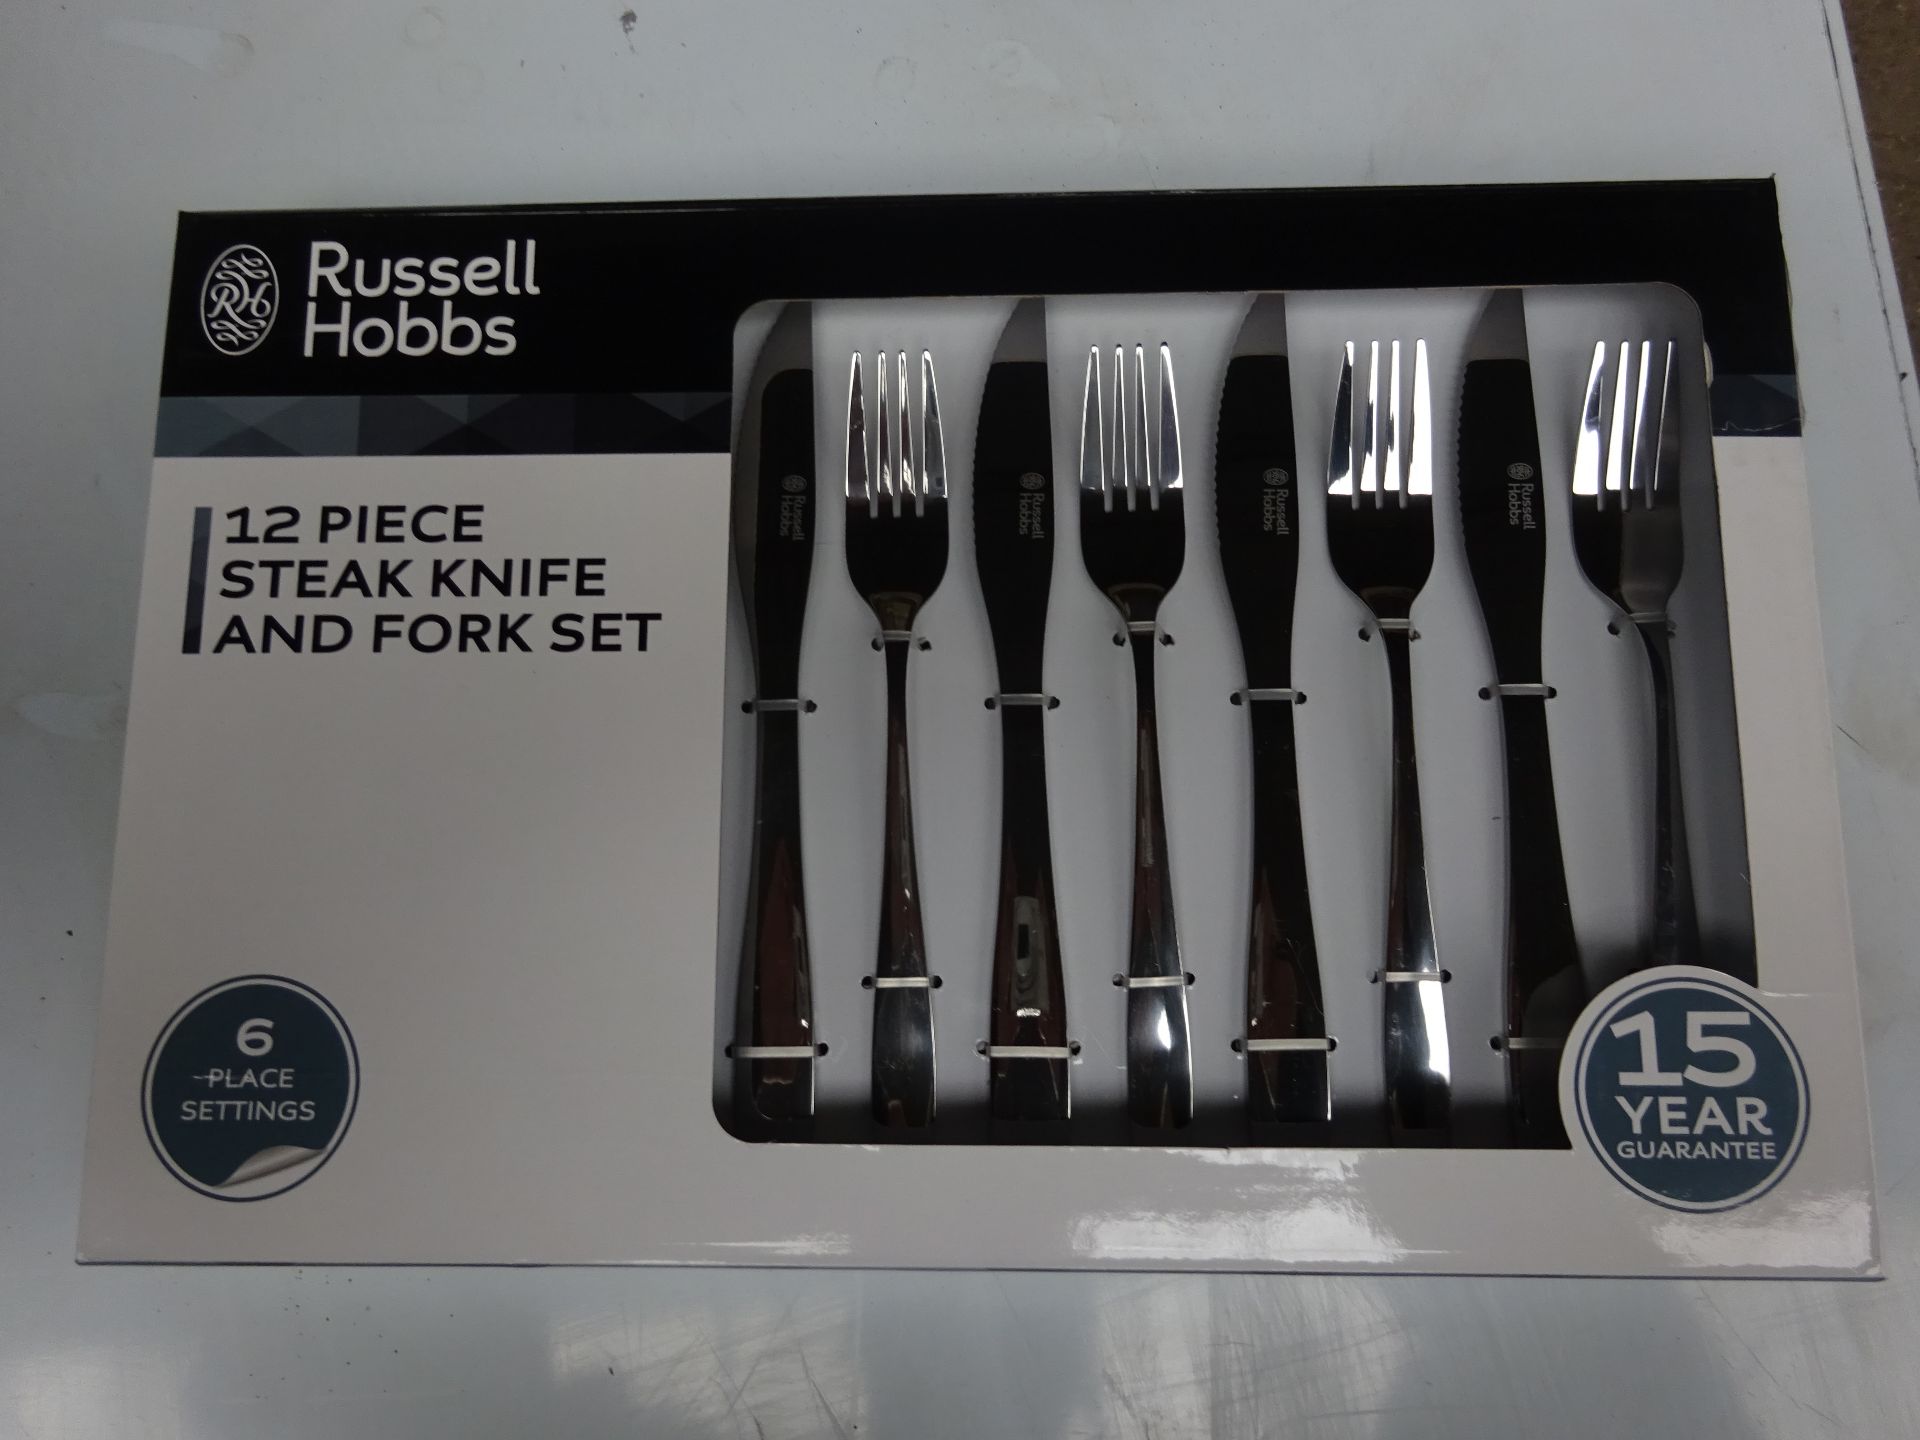 Twelve piece Russell Hobbs steak knife and fork set